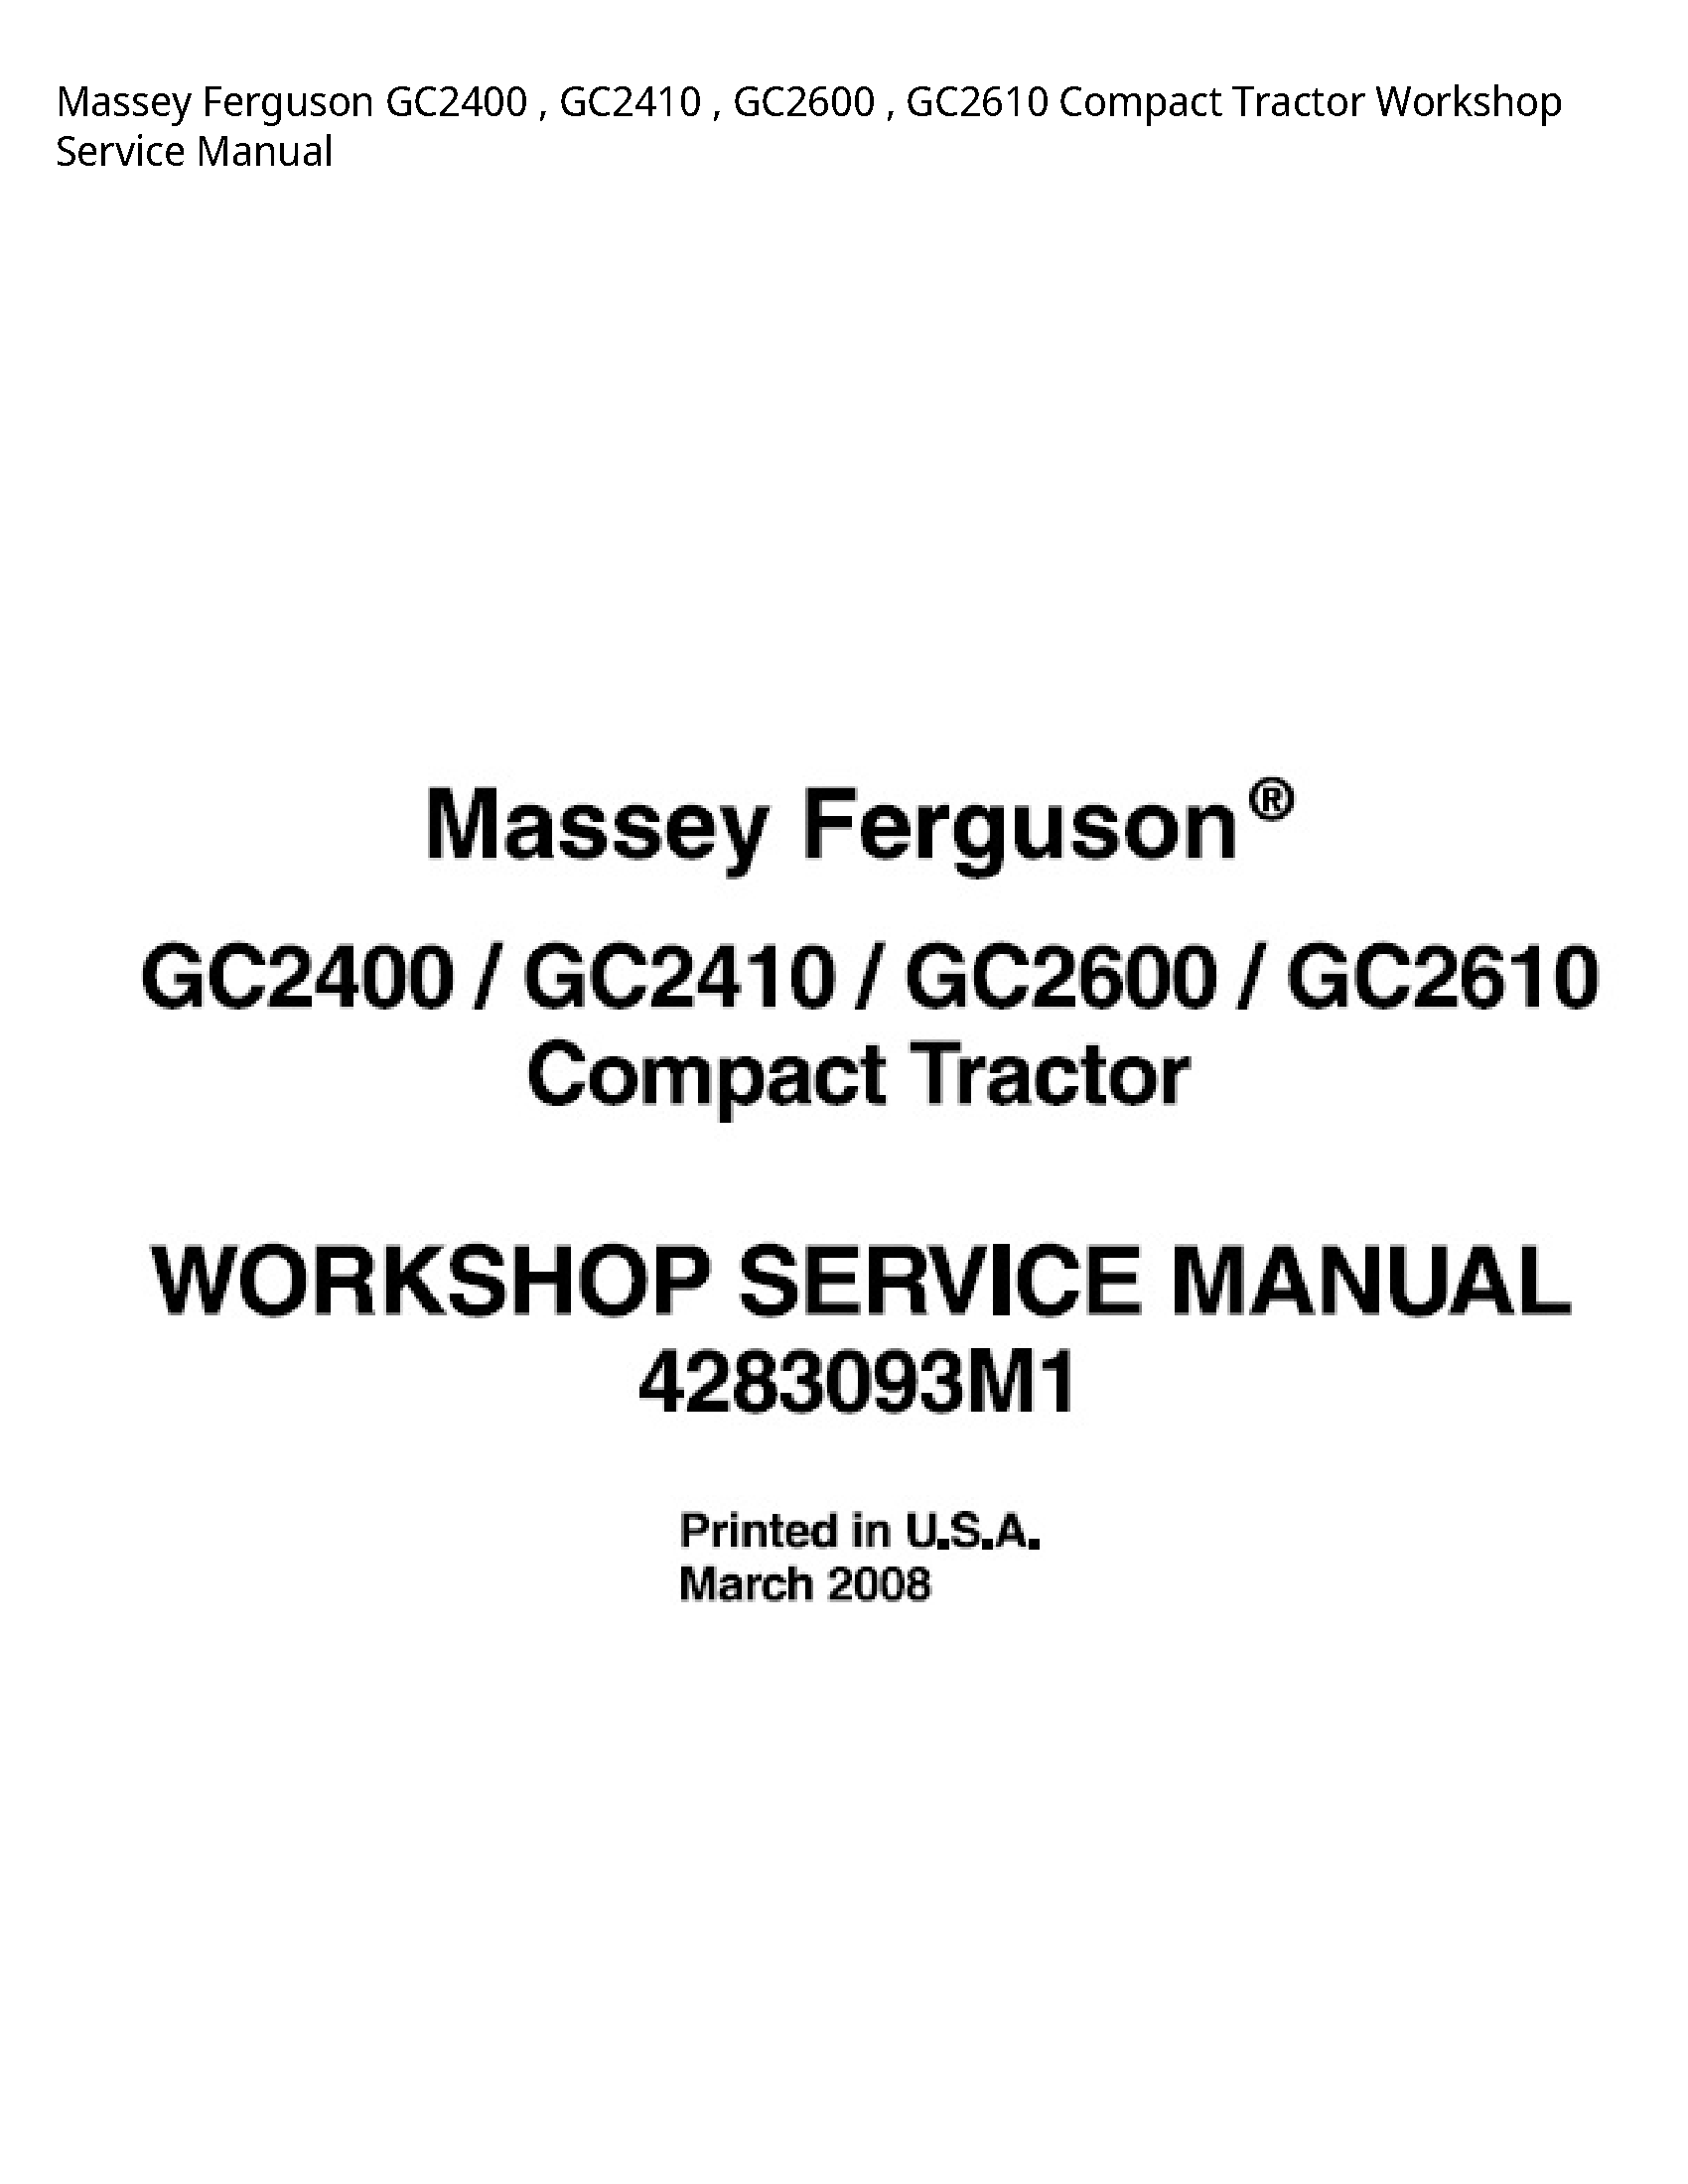 Massey Ferguson GC2400 Compact Tractor Service manual